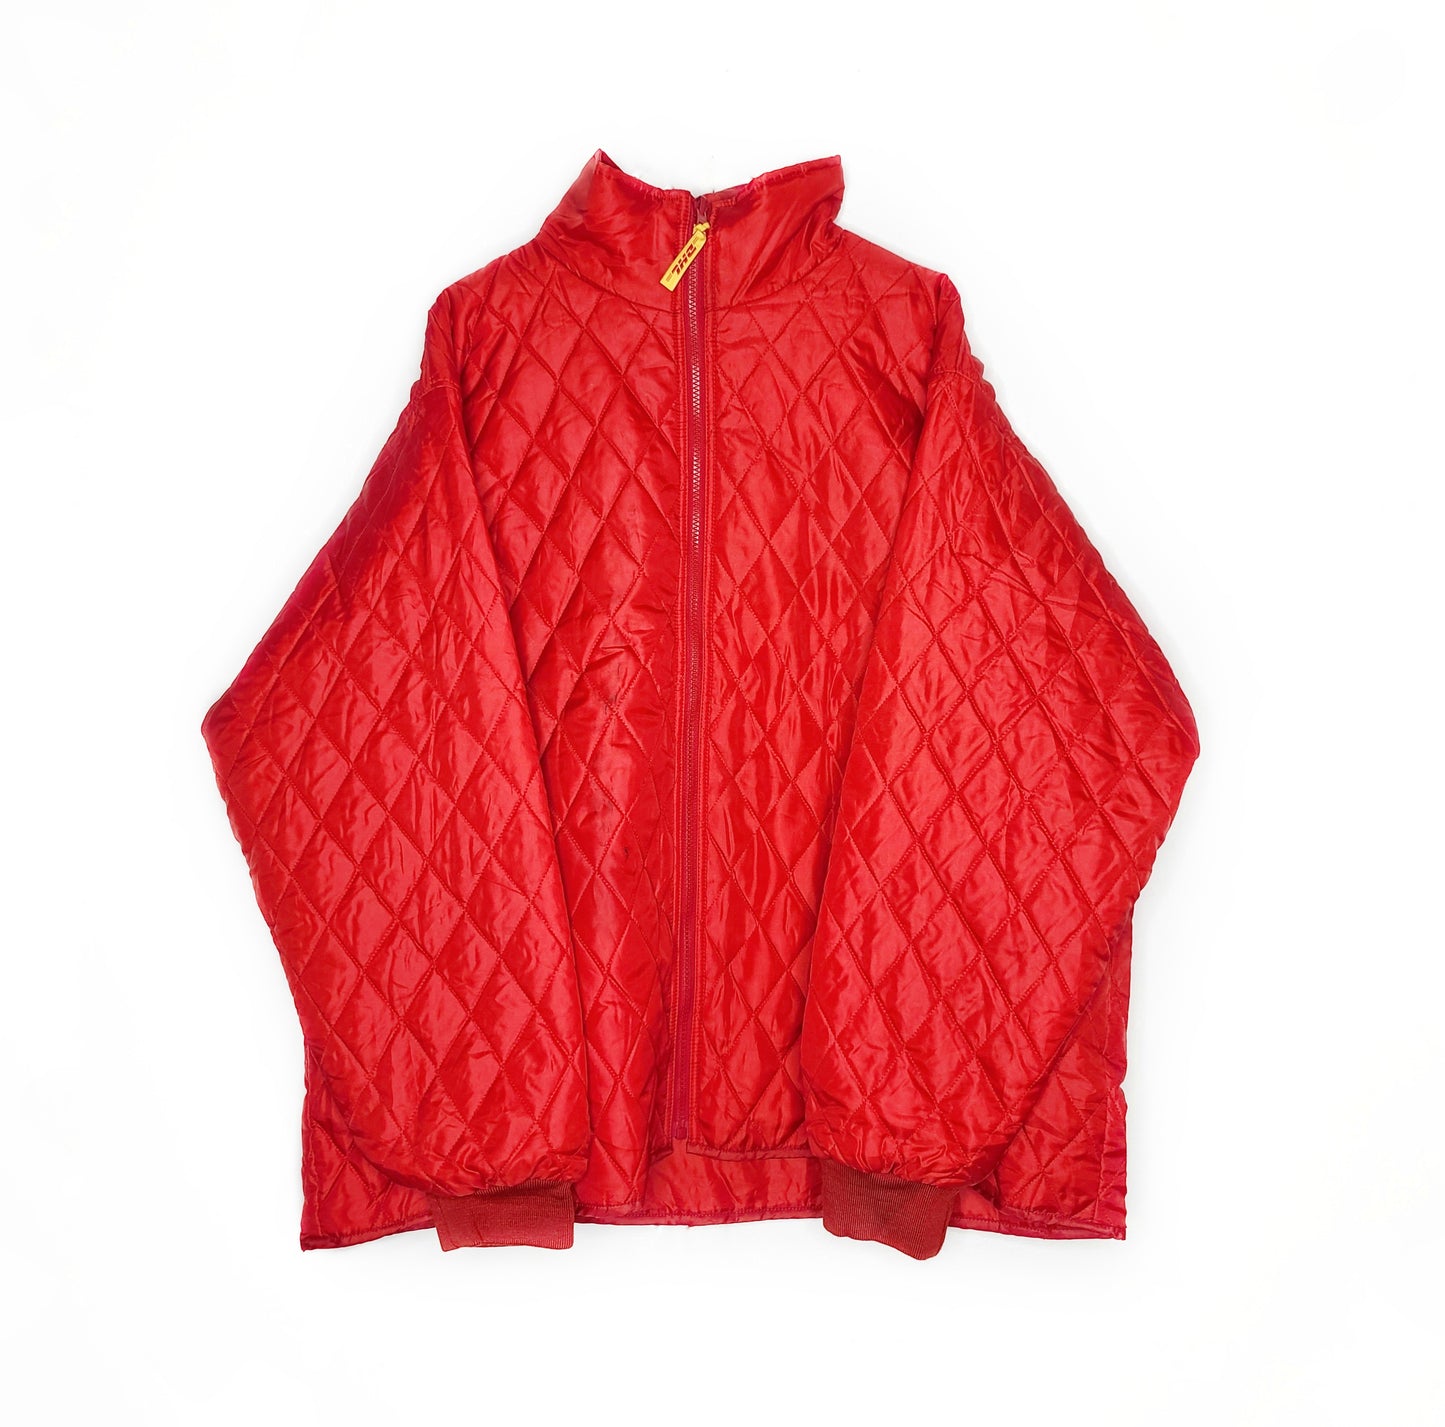 Dhl doudoune vintage 90s oversize rouge alternatif cyber puffer jacket 